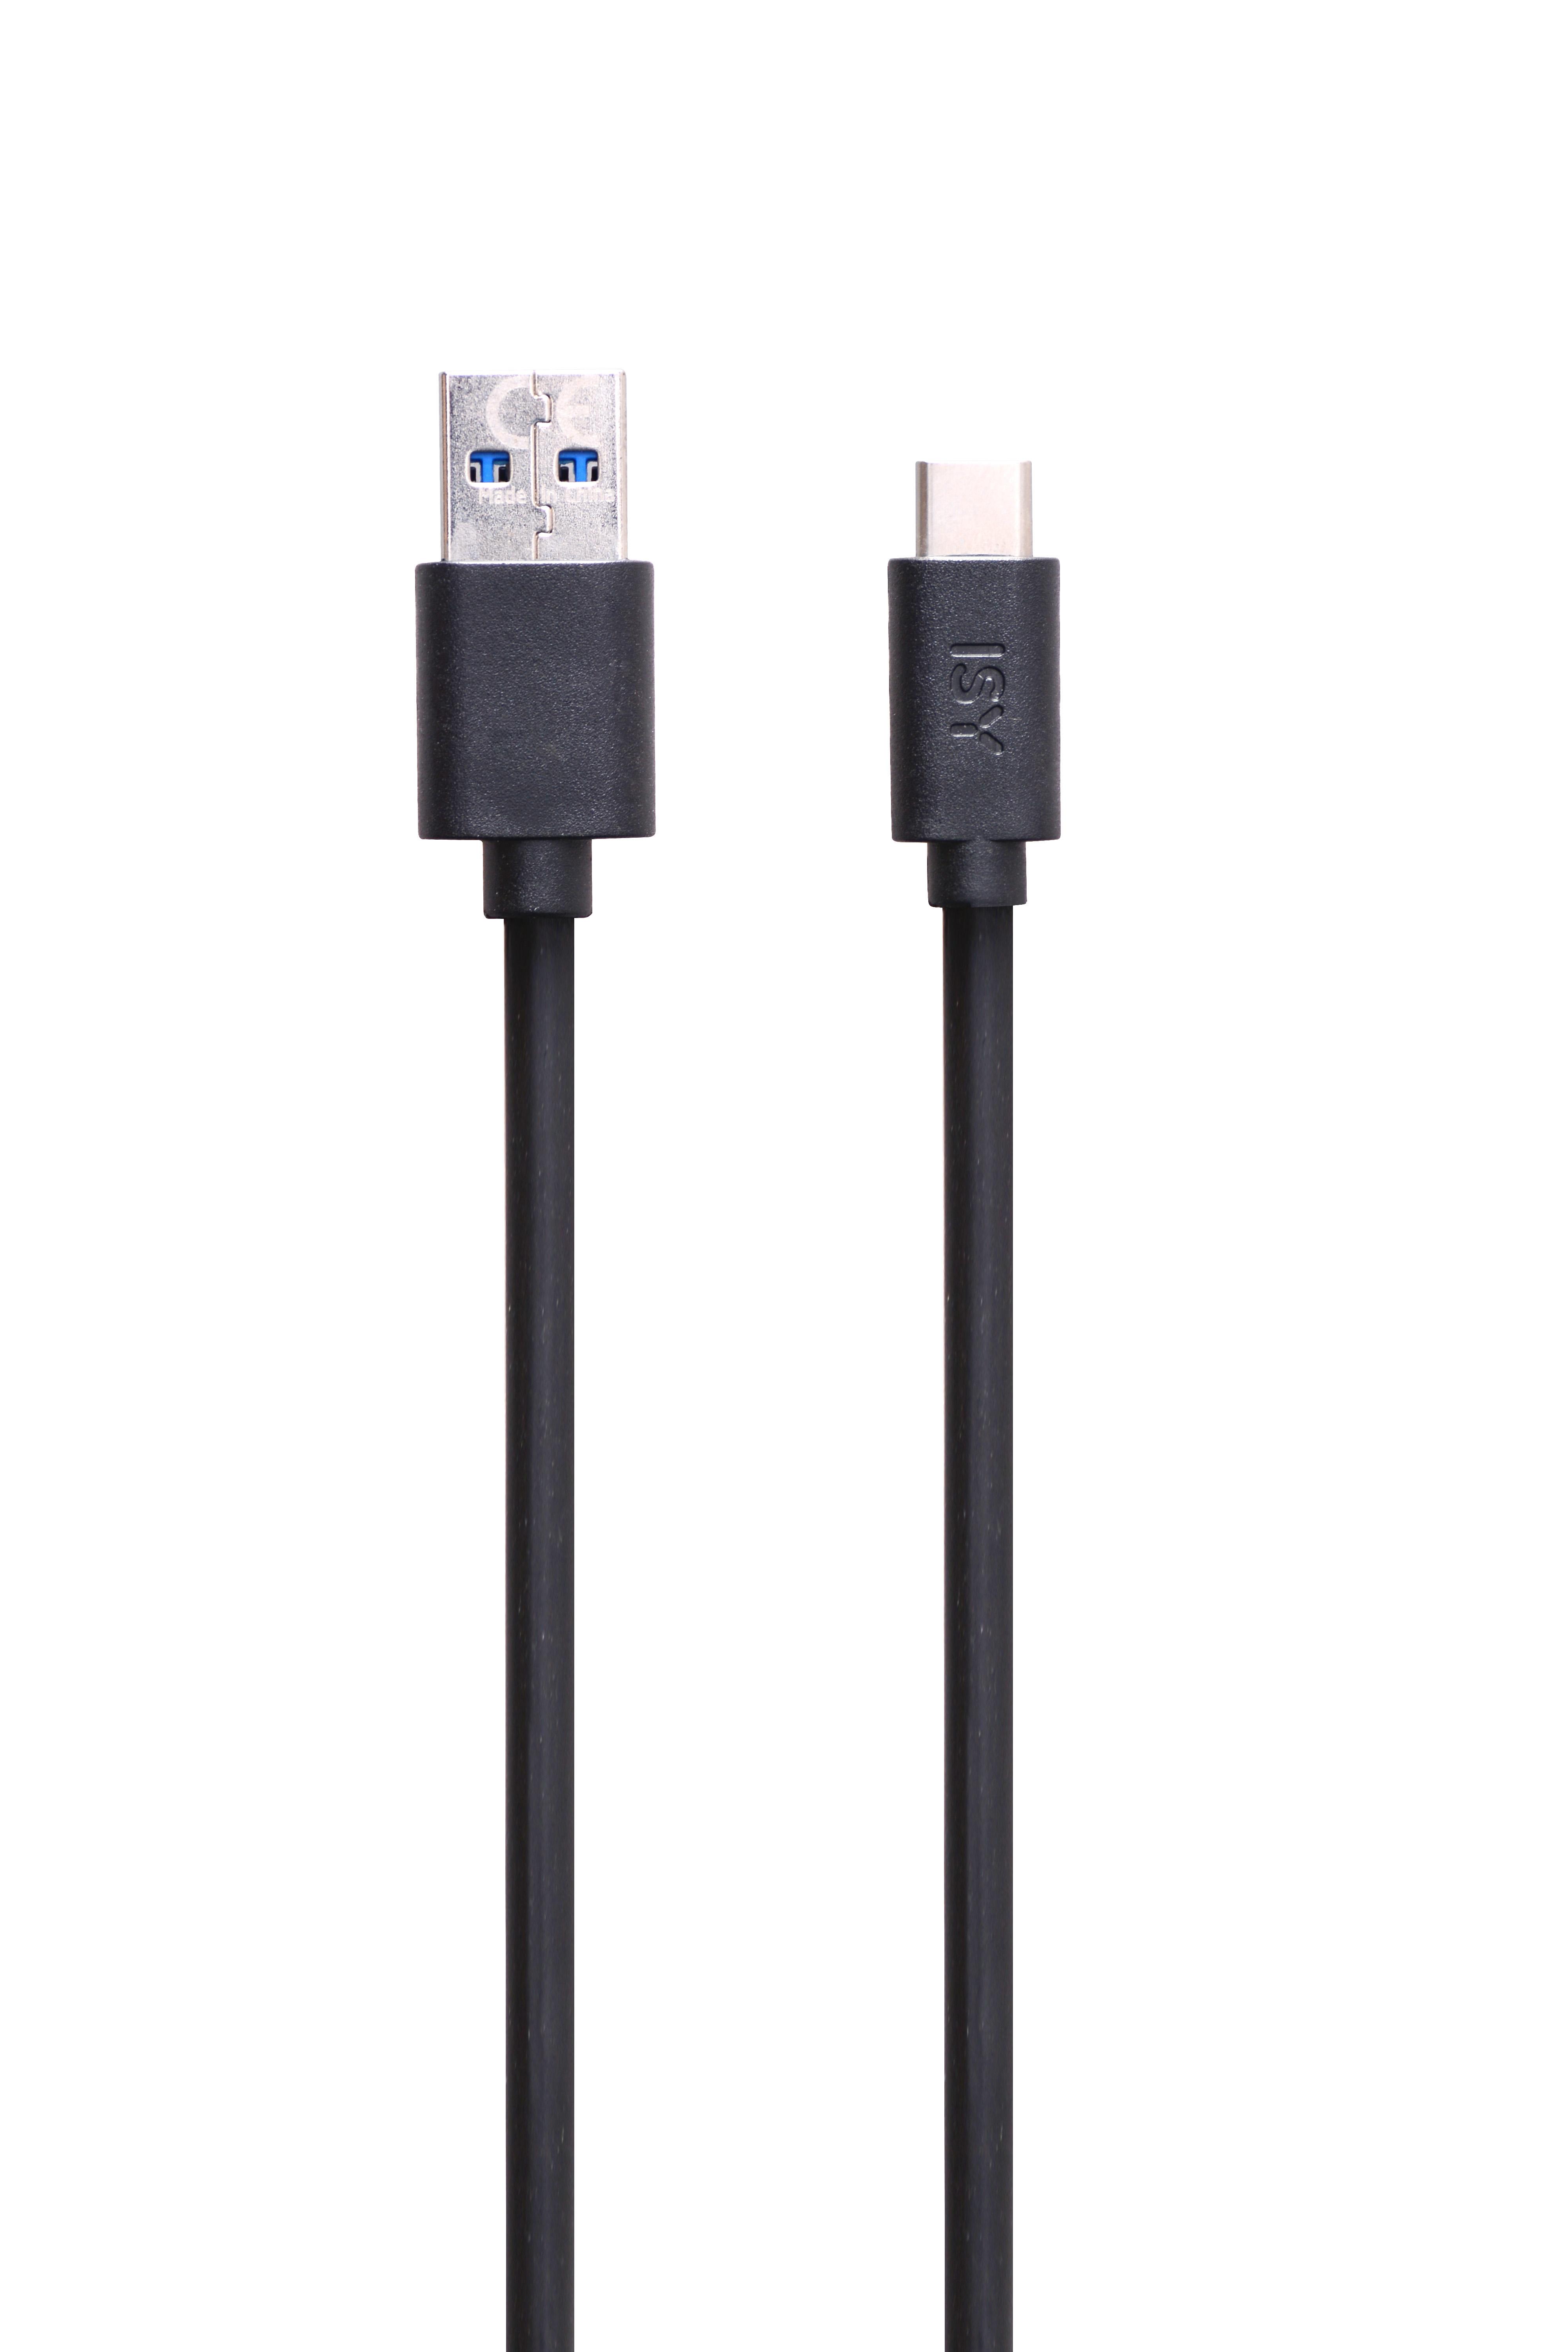 ISY IUC-3200 USB-C 2 Datenkabel, m, Schwarz Datenkabel/Ladekabel, 3.0